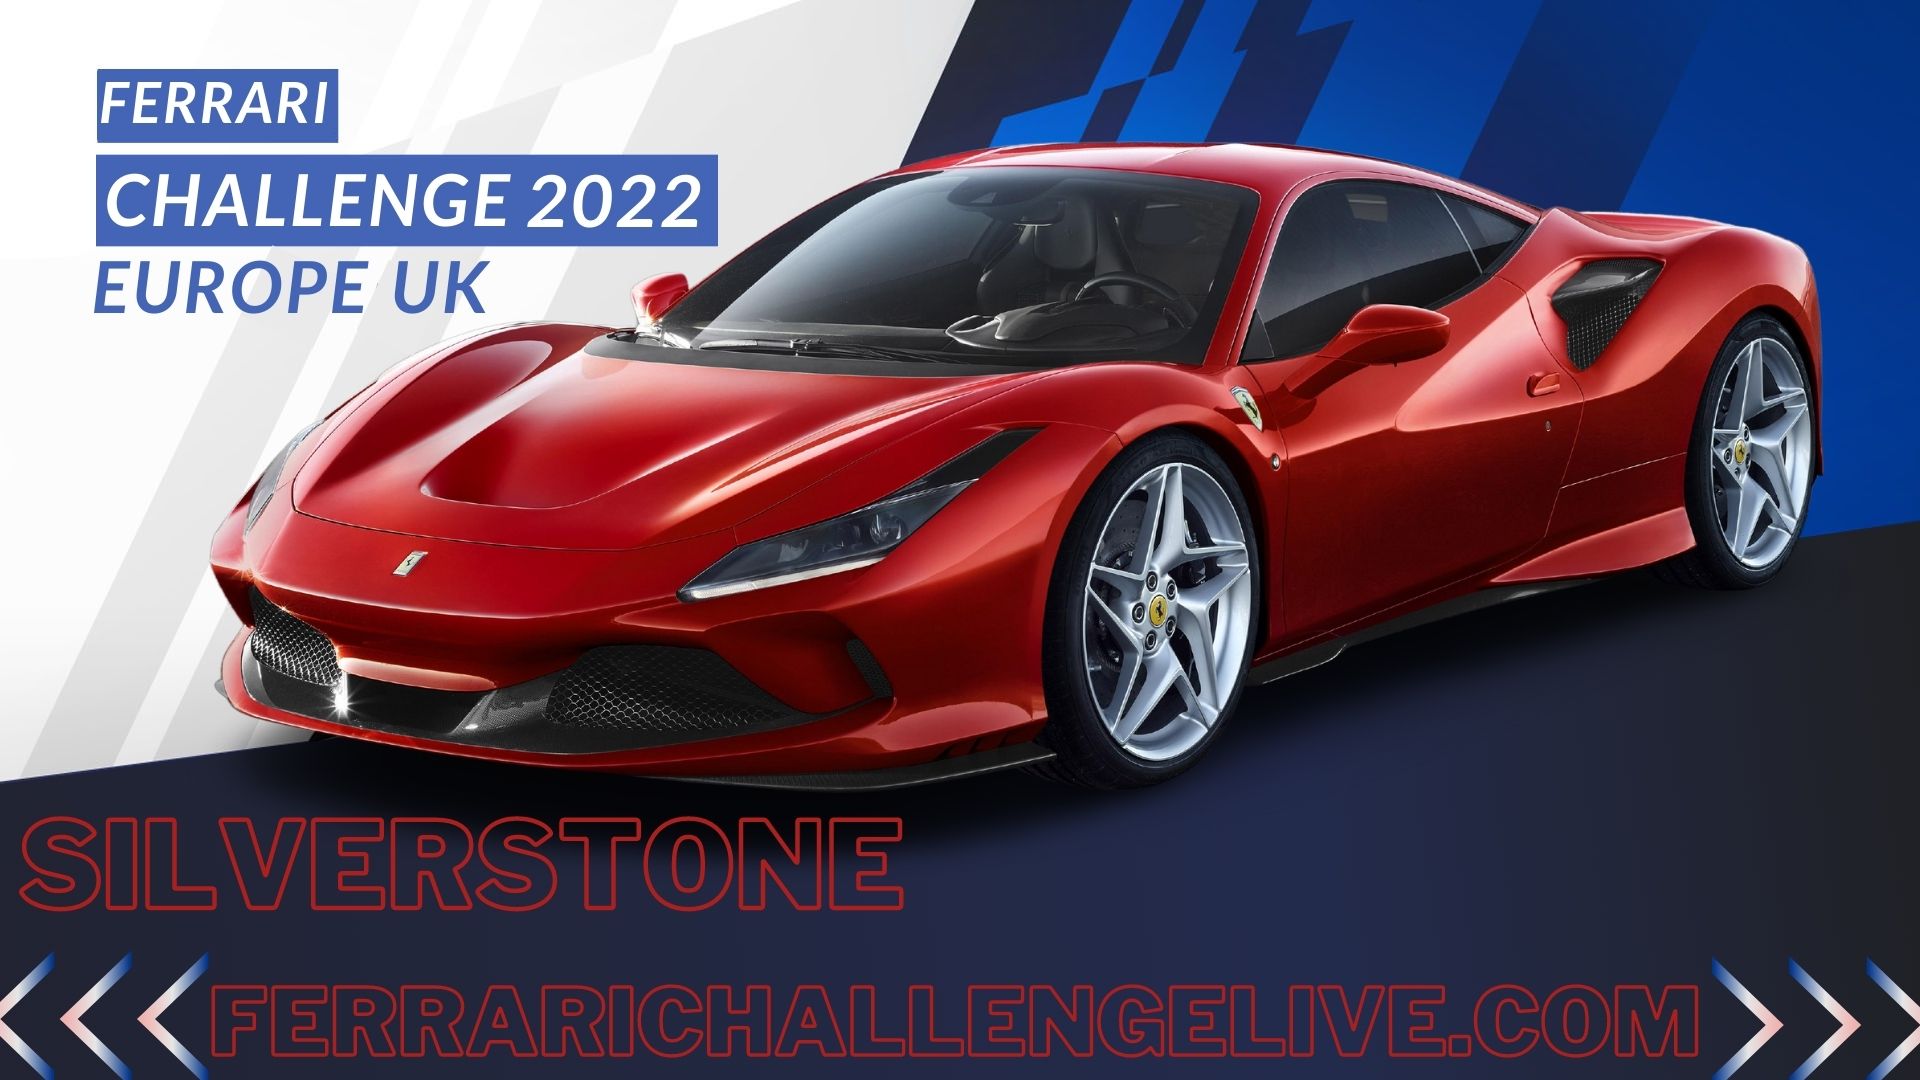 Silverstone Live Stream 2022 | Ferrari Challenge